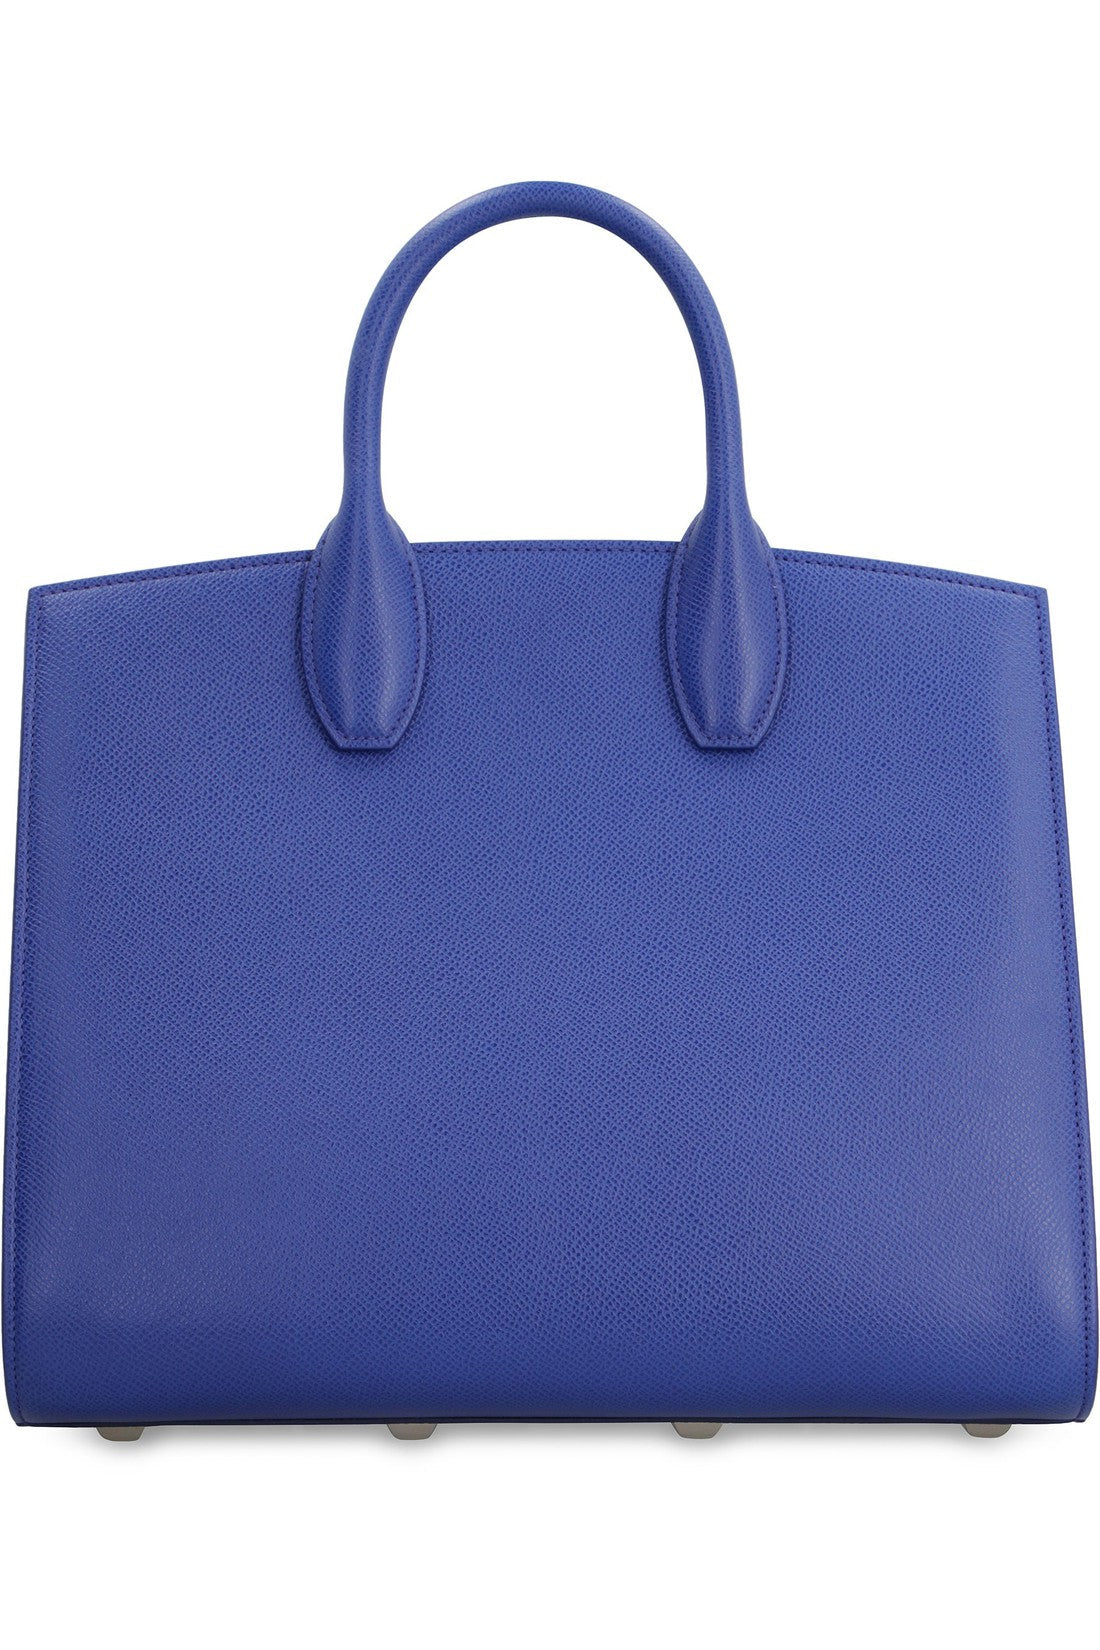 FERRAGAMO-OUTLET-SALE-Studio Box leather handbag-ARCHIVIST